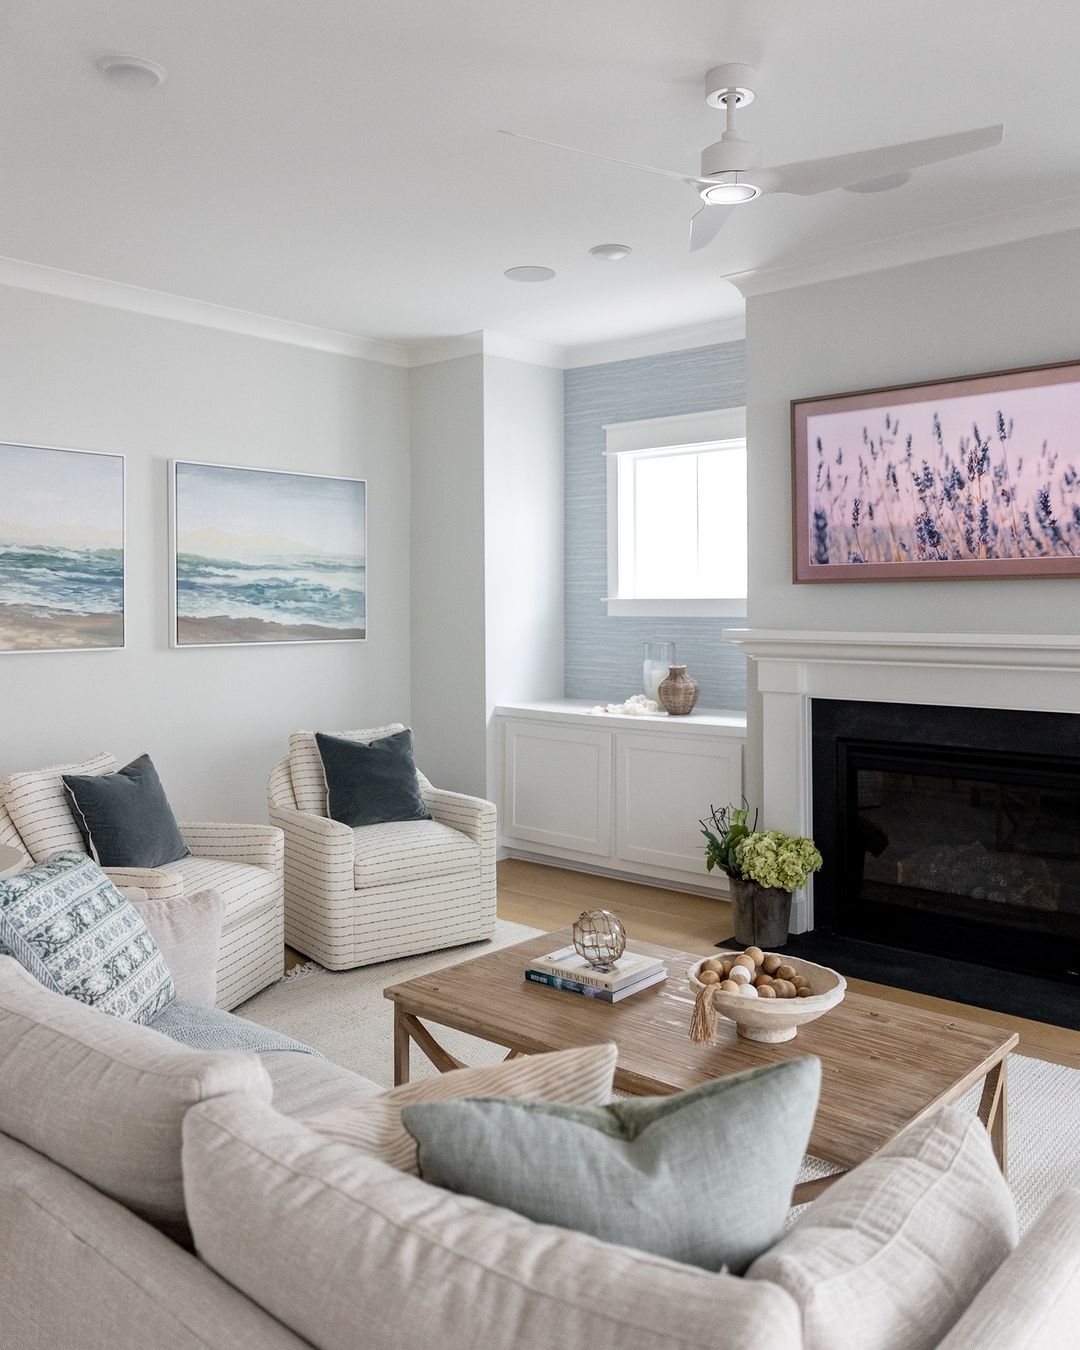 Incorporate Coastal Art for a Serene Fireplace Setting